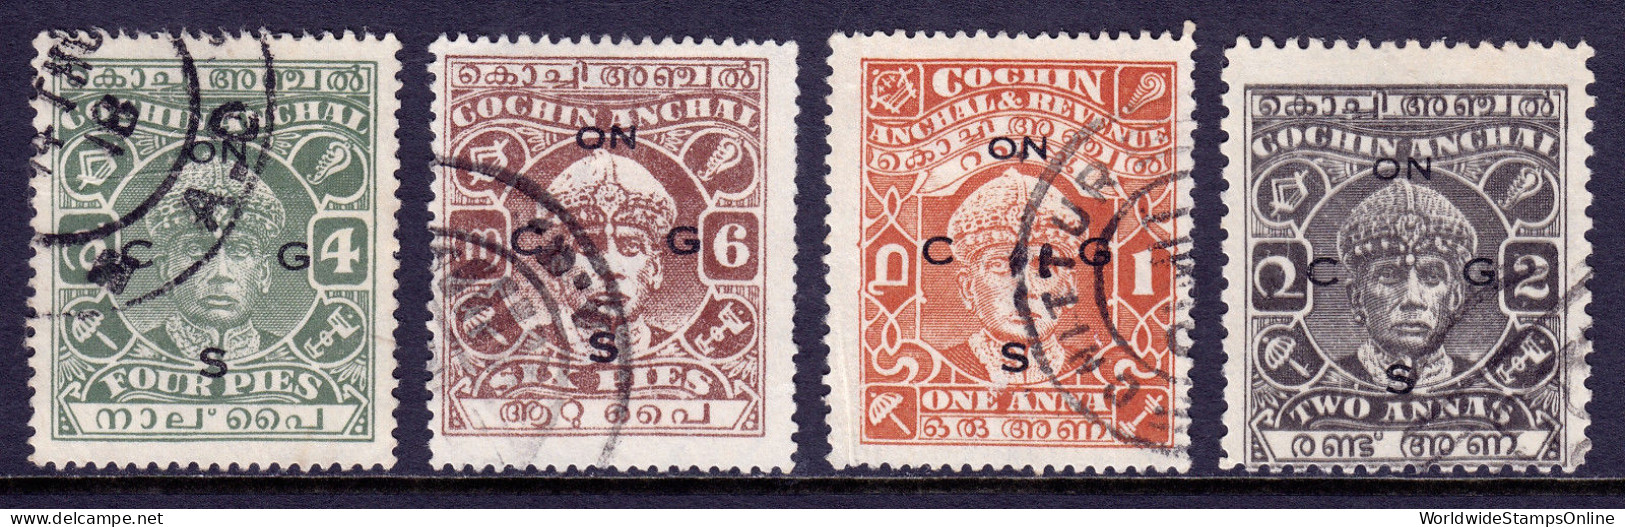 INDIA (COCHIN) — SG O54//O56b  — 1942-43 UNISSUED OVPT TYPE O10 — USED — SCV £32 - Cochin